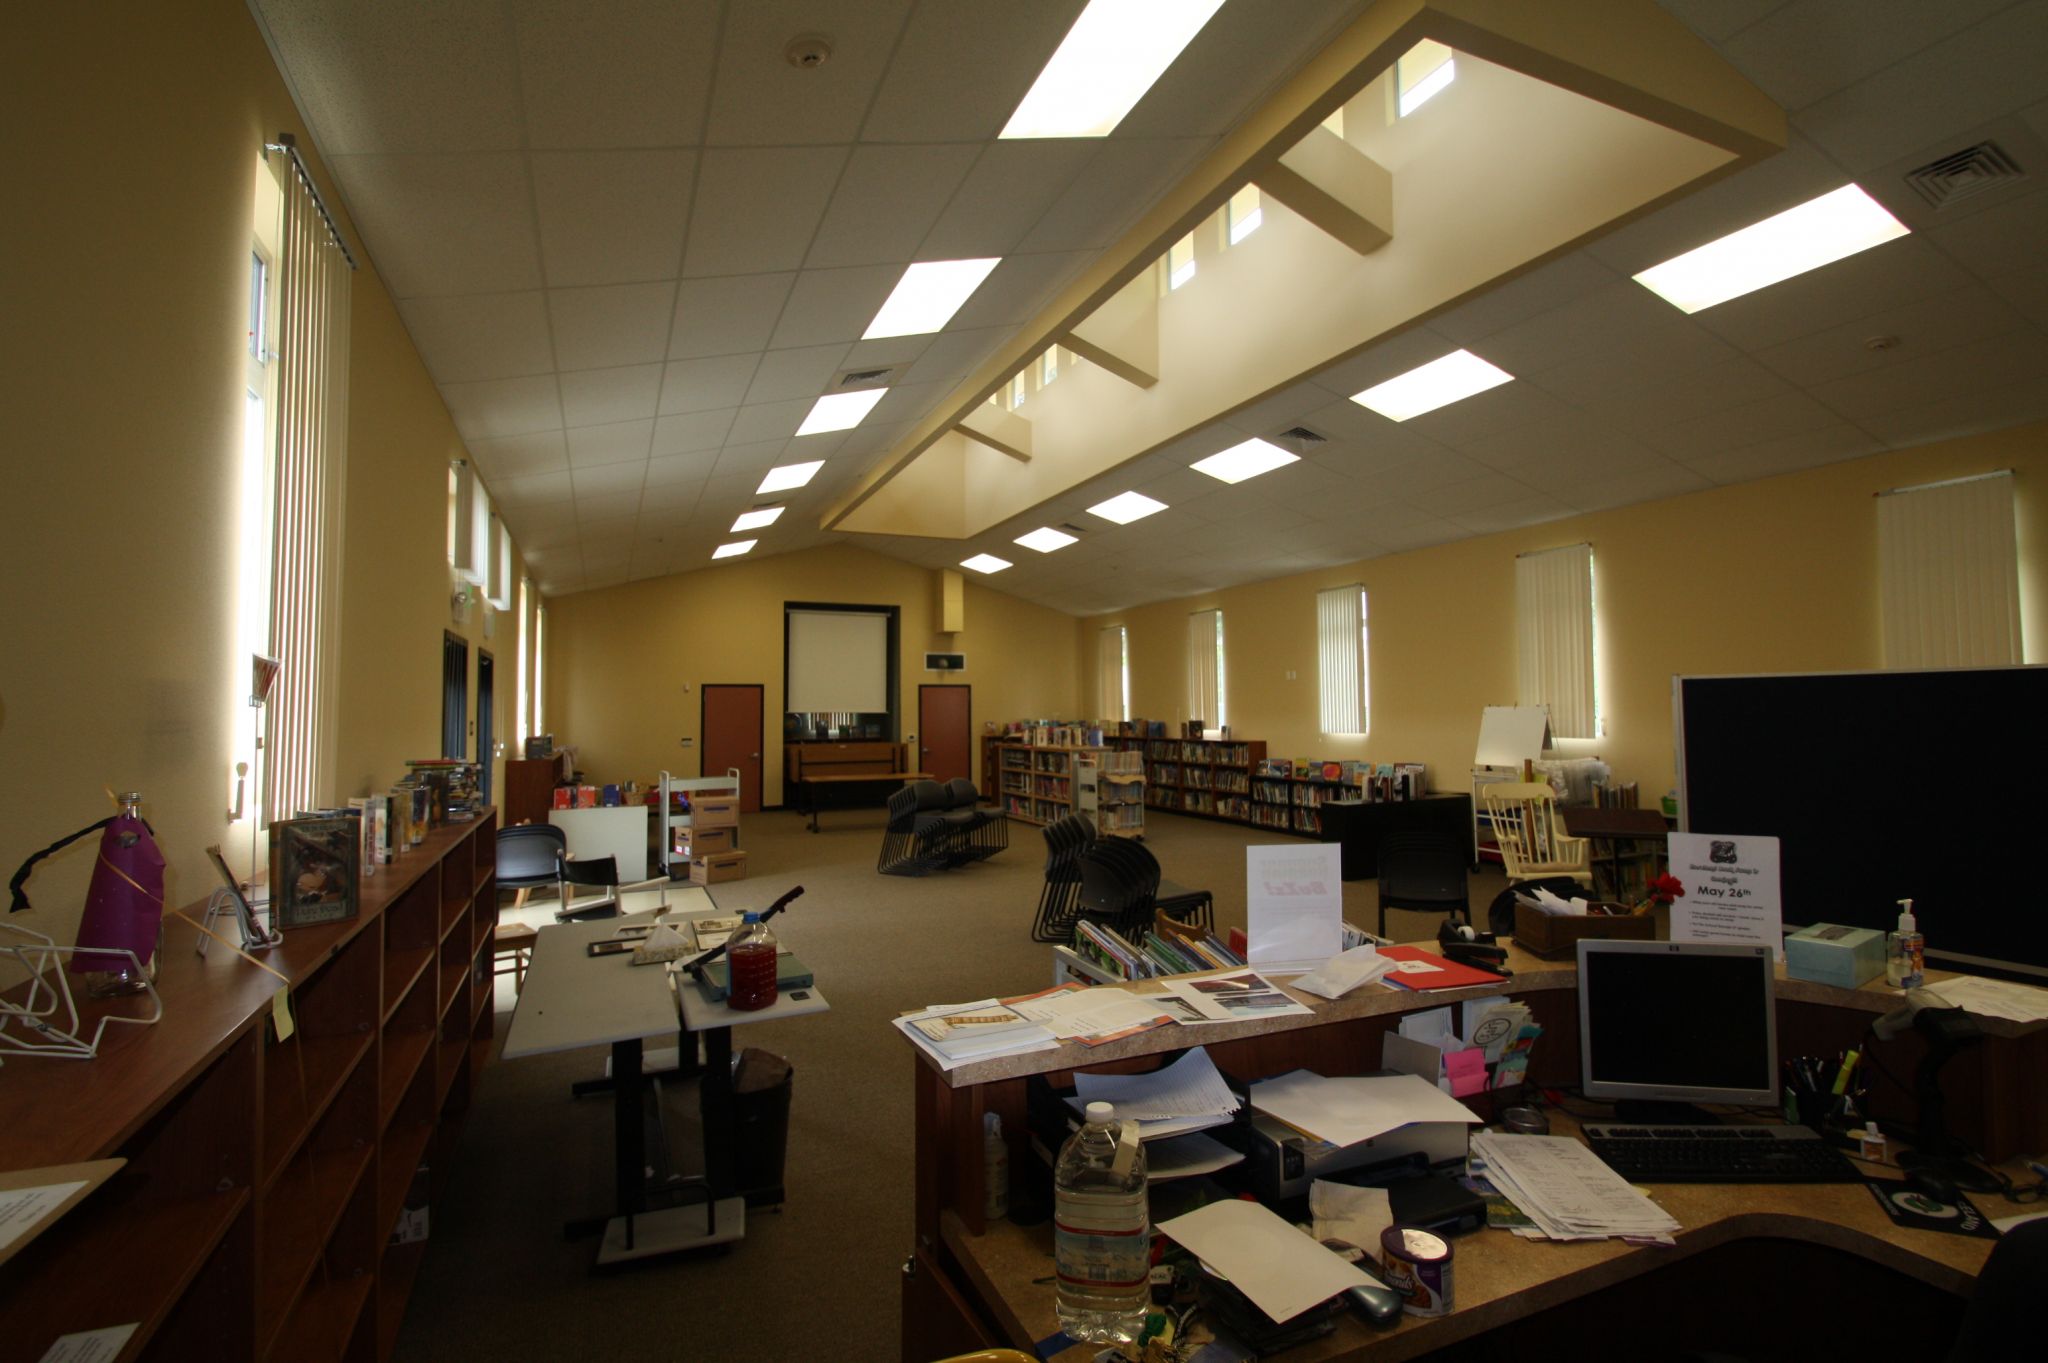 Interior of Modular Library Building at Roseland Elementary School